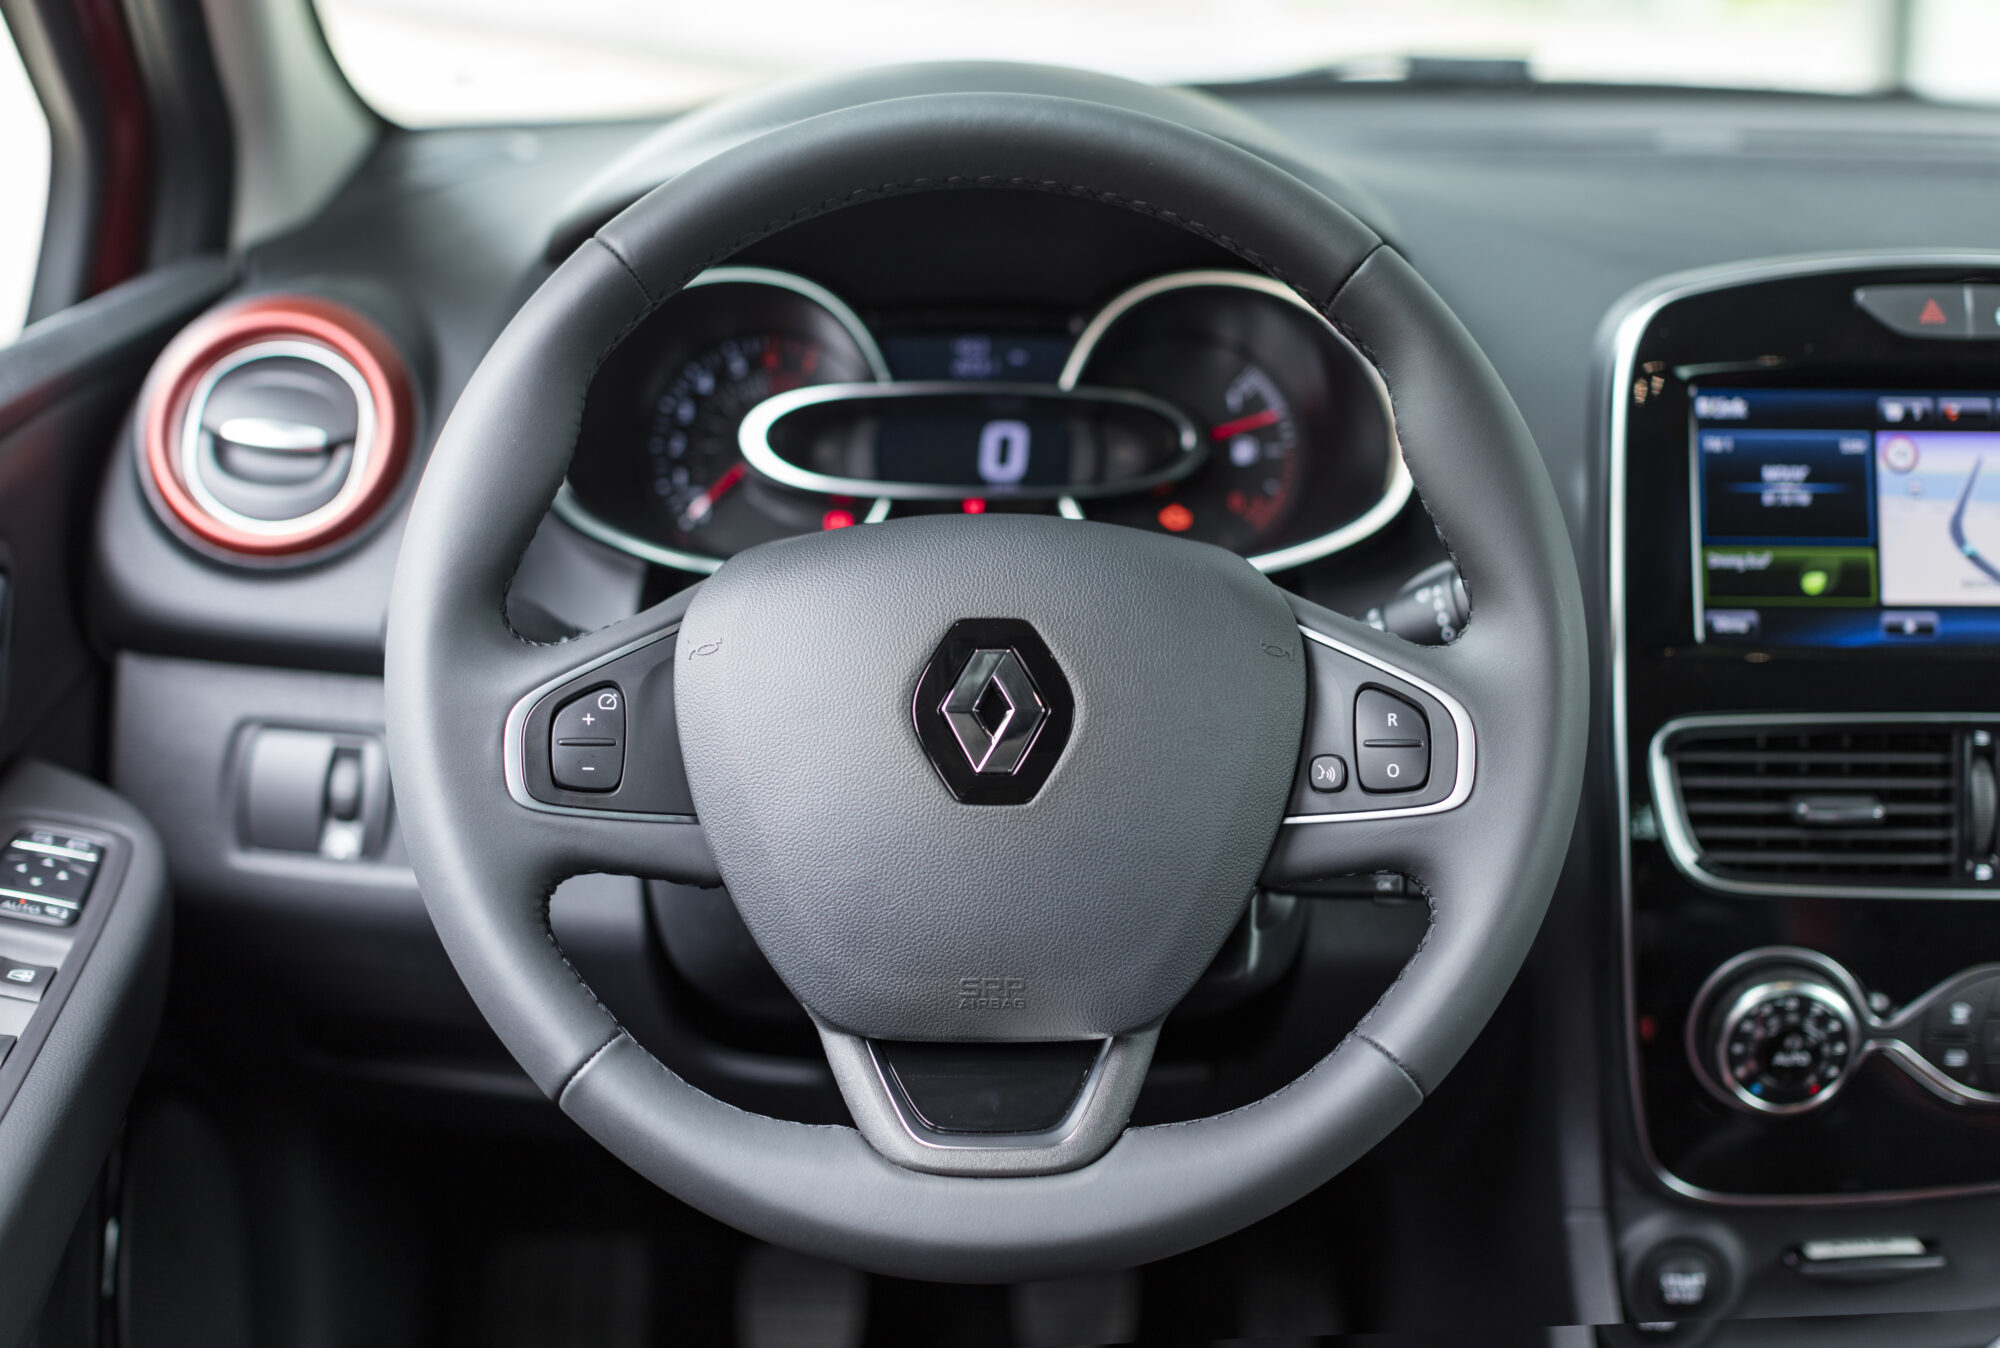 2016 - Nuova Renault CLIO